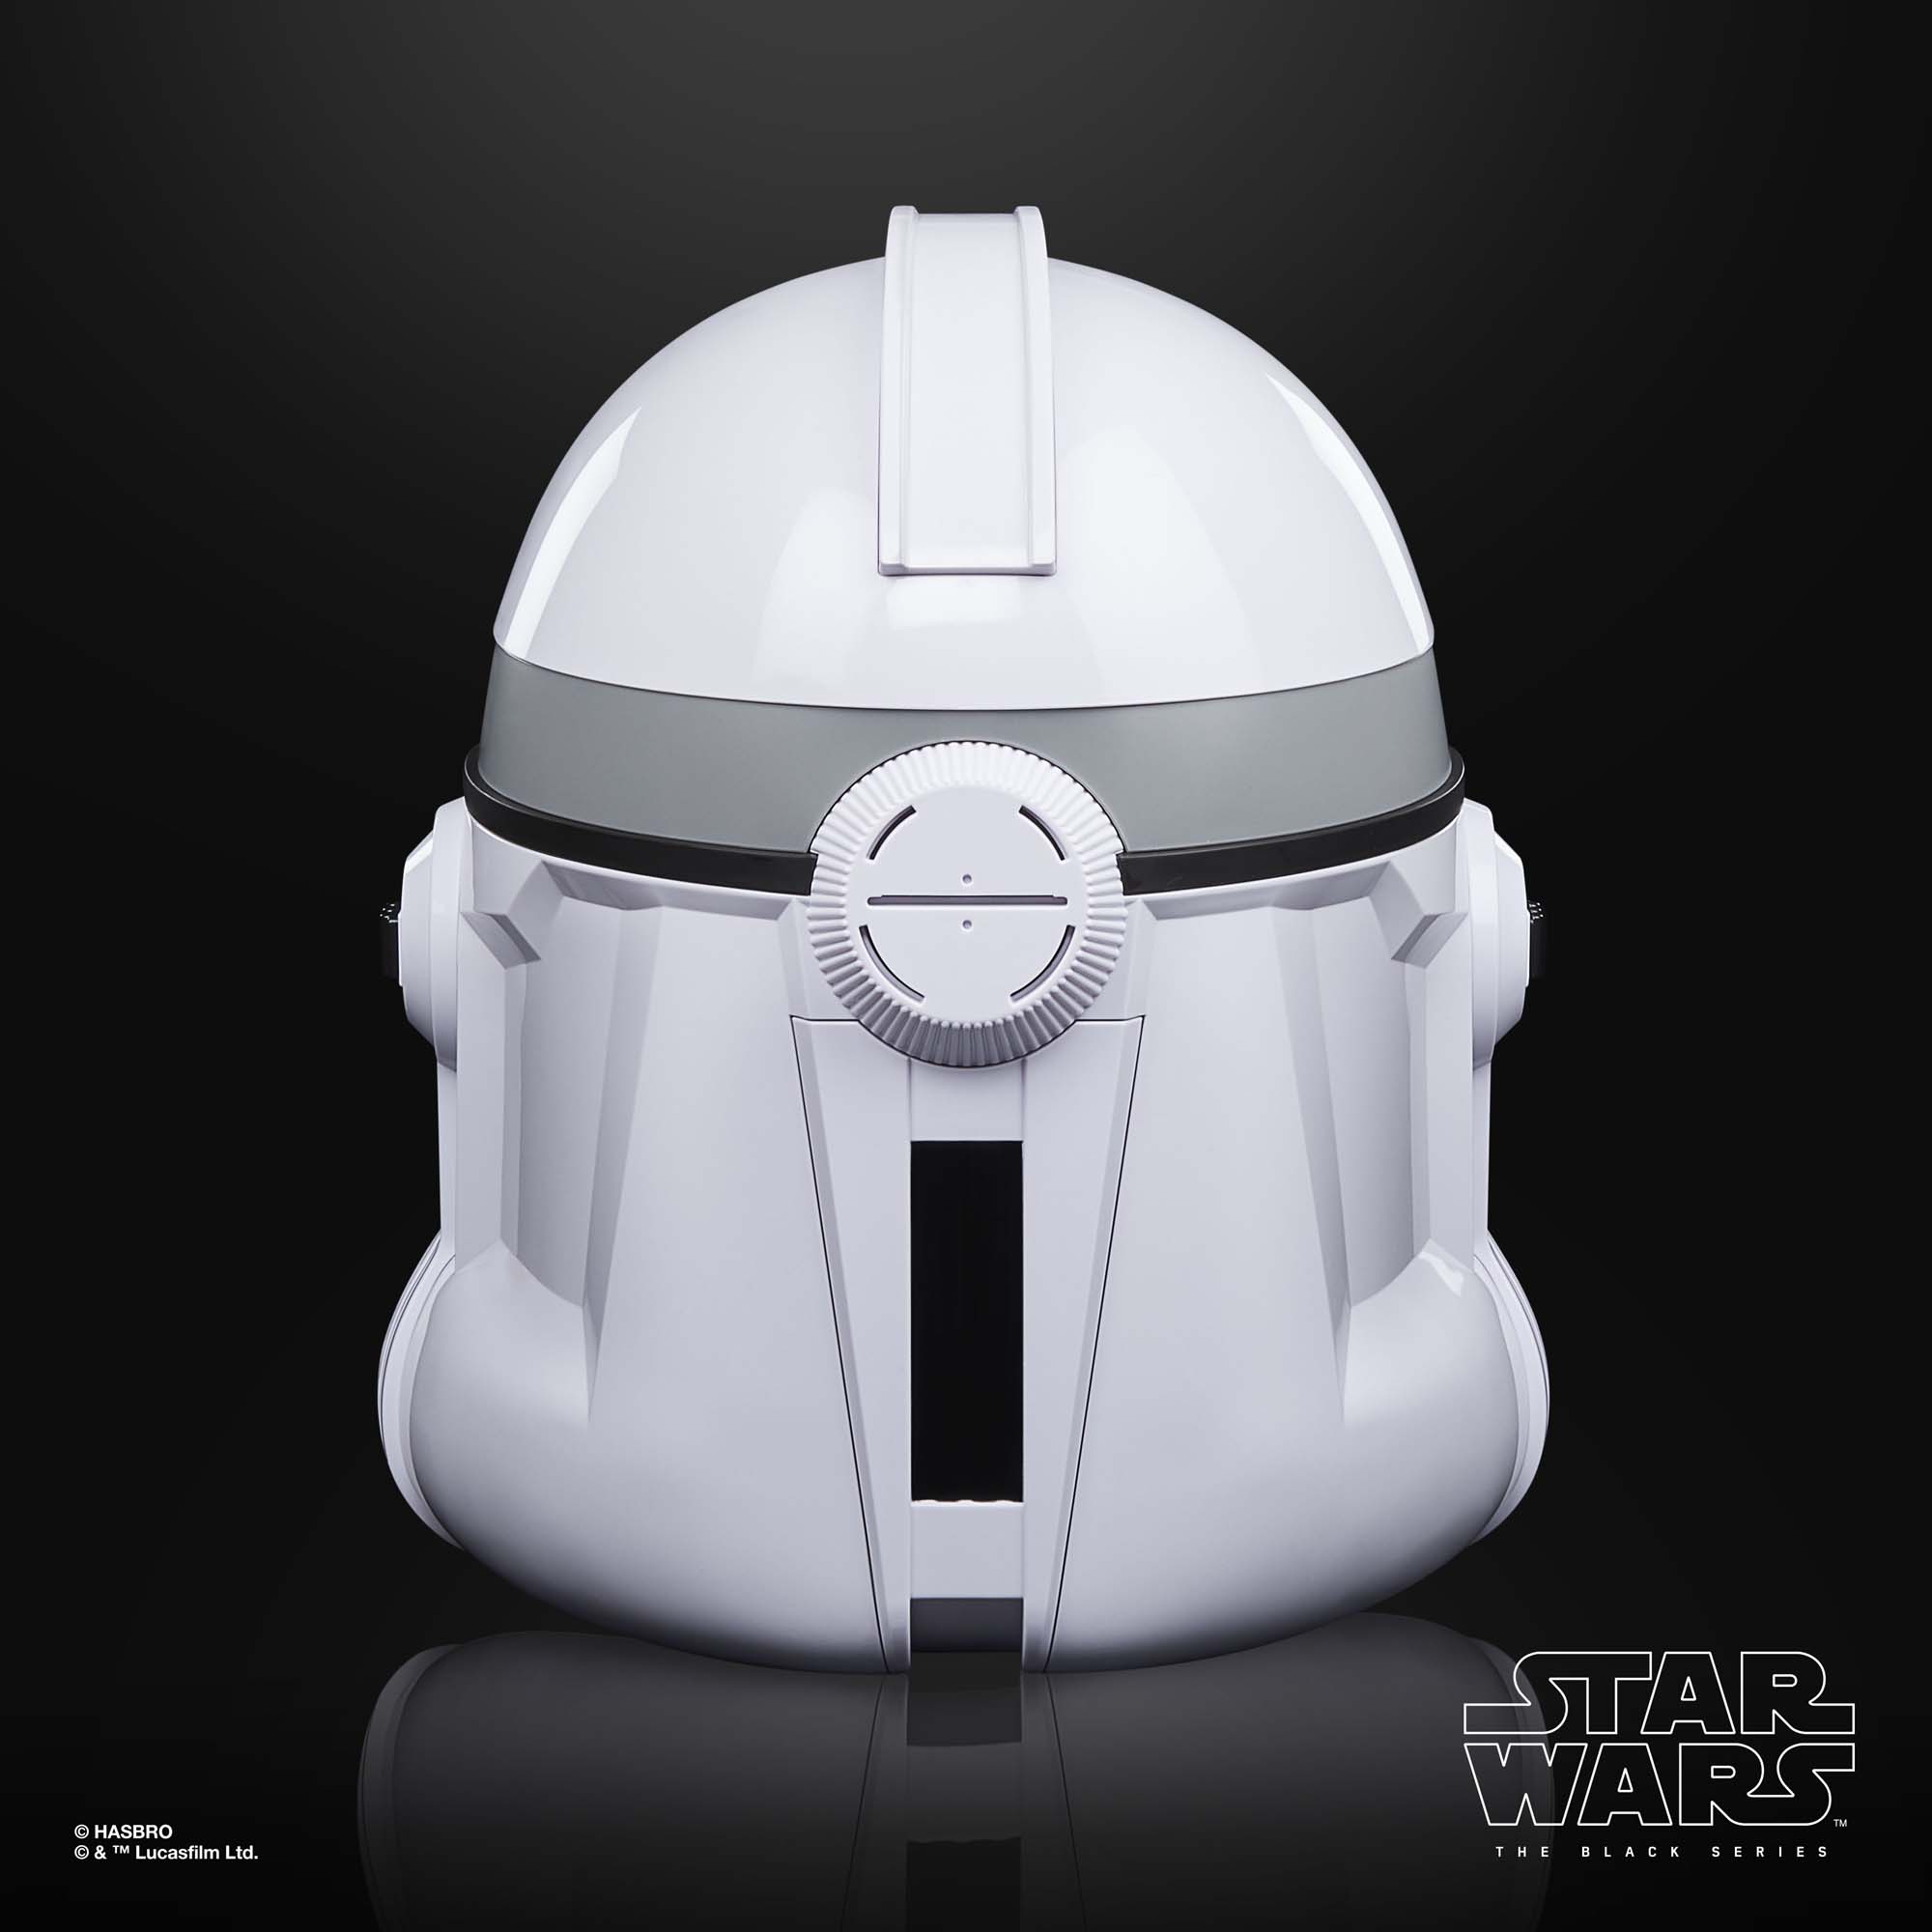 Star Wars The Black Series Phase II Clone Trooper Premium Electronic Helmet  F39115L0 5010994162764